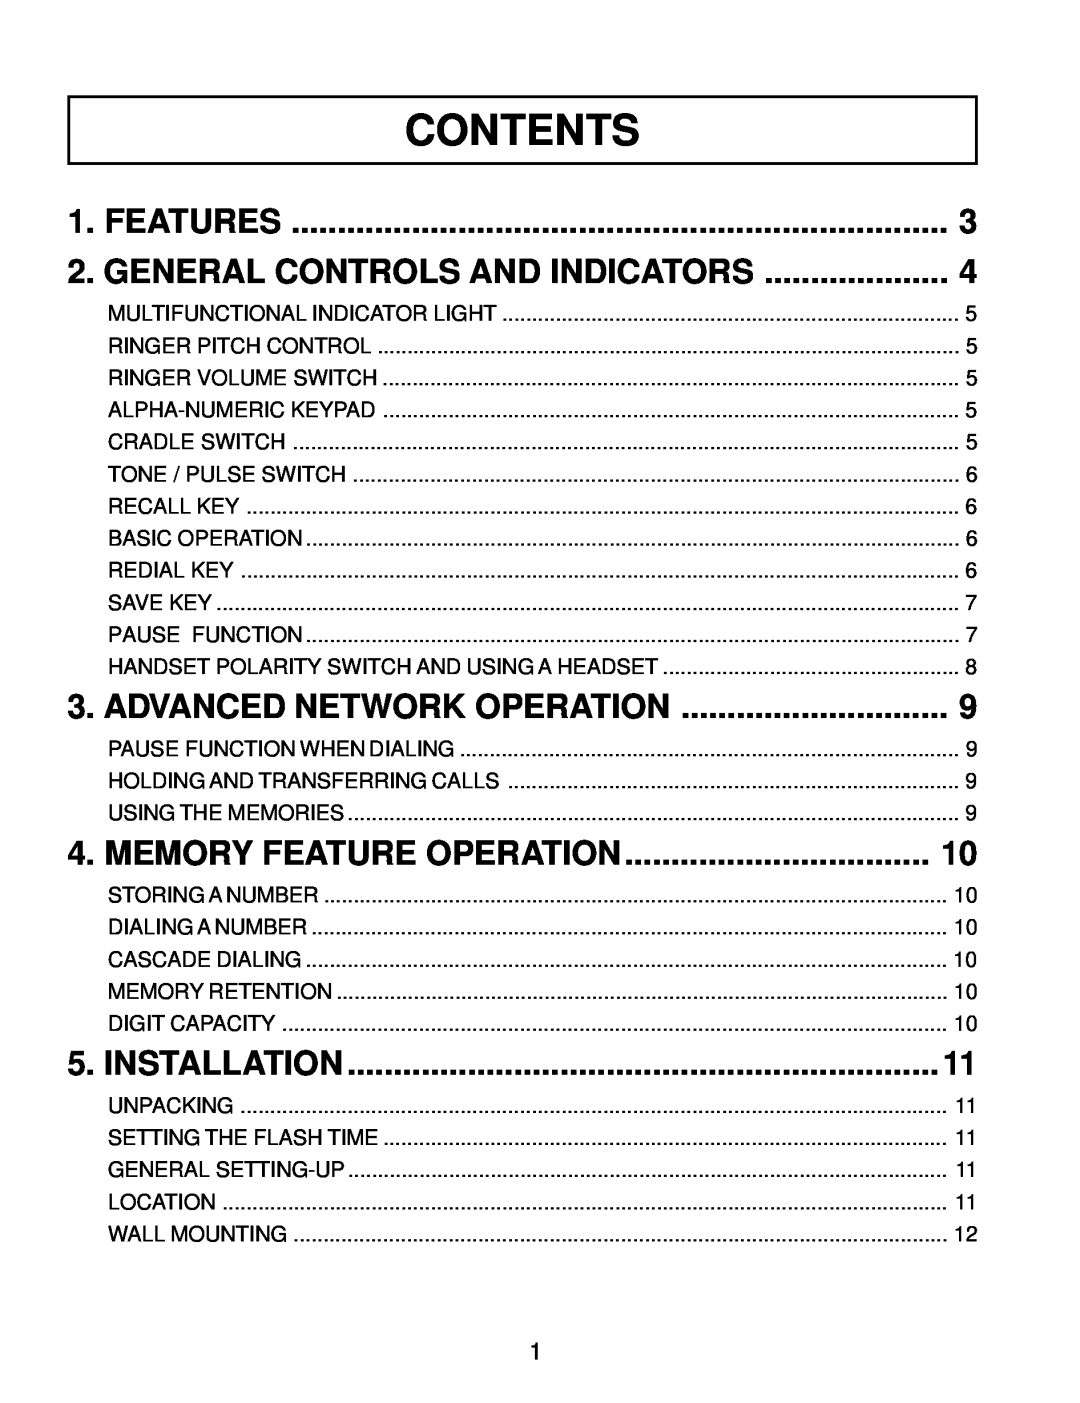 Interquartz IQ331 manual Contents, Features, Memory Feature Operation, Installation, General Controls And Indicators 